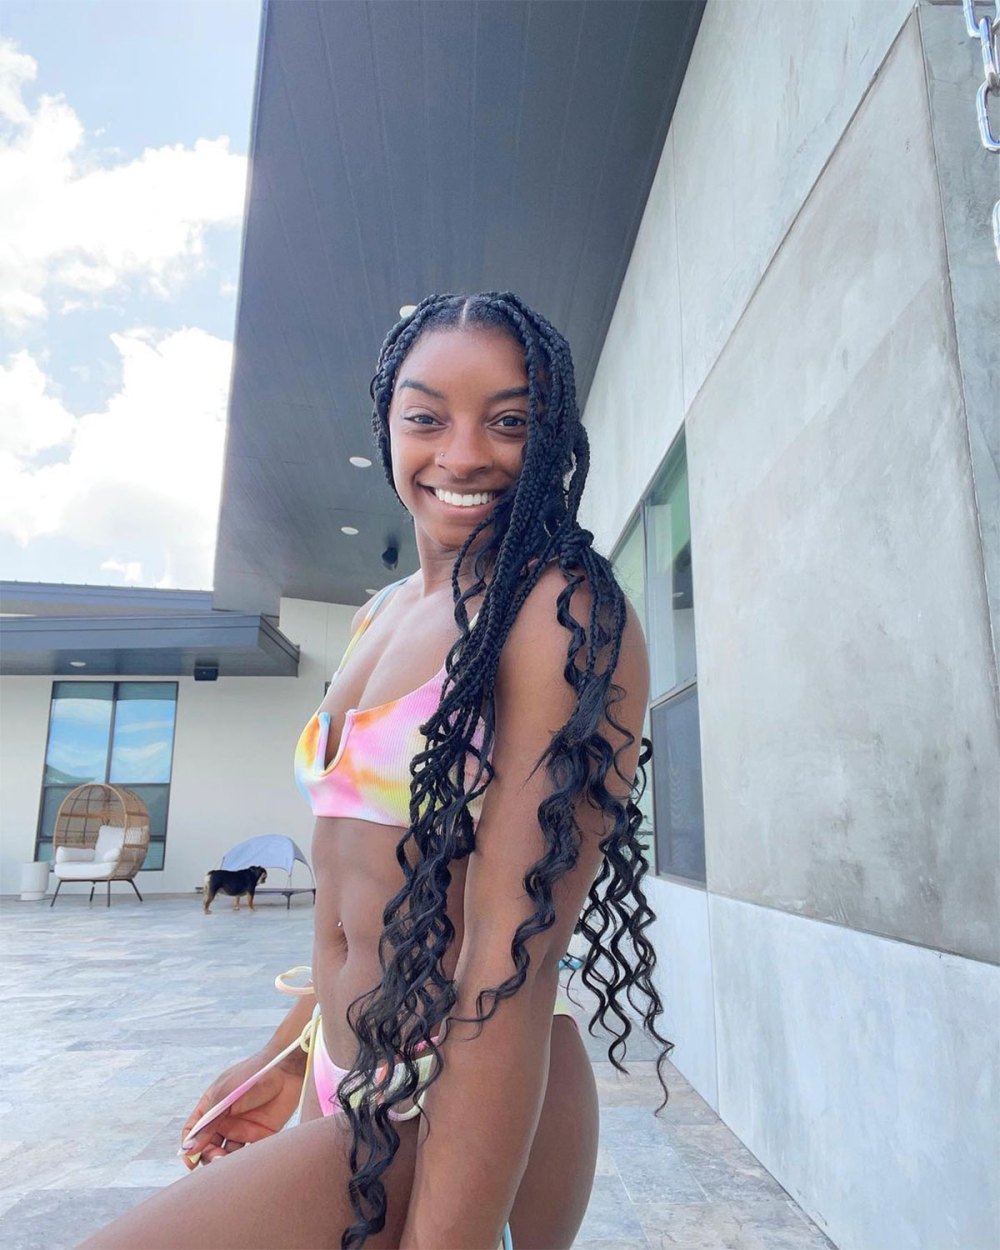 Simone Biles Enjoys Pool Day in Tie-Dye Bikini After Olympics